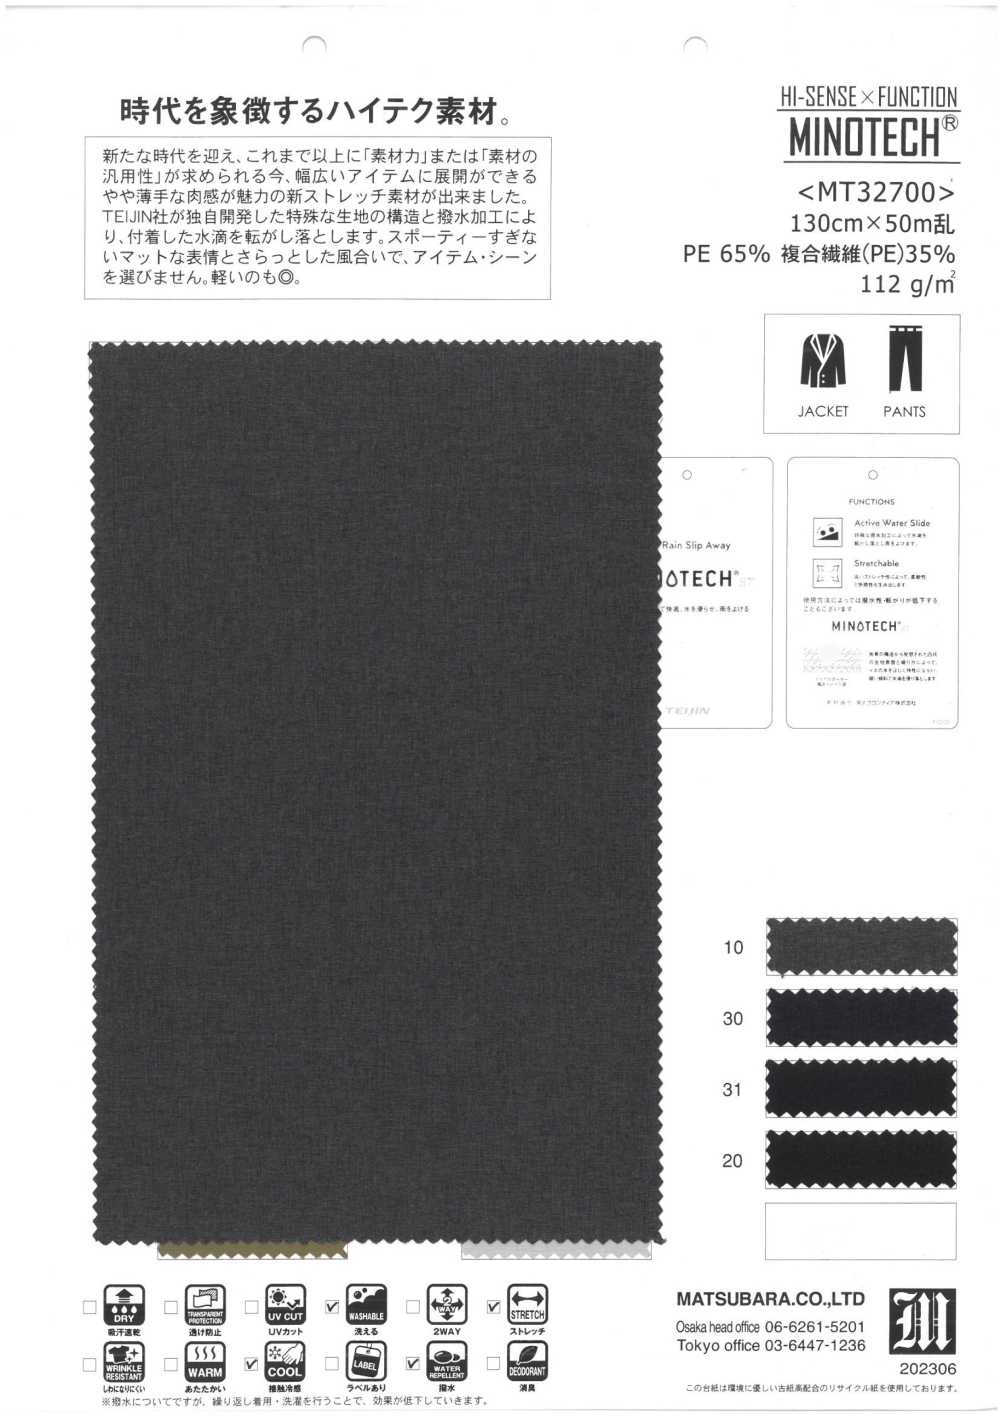 MT32700 HI-SENSE×FUNCTION MINOTECH[Textile / Fabric] Matsubara